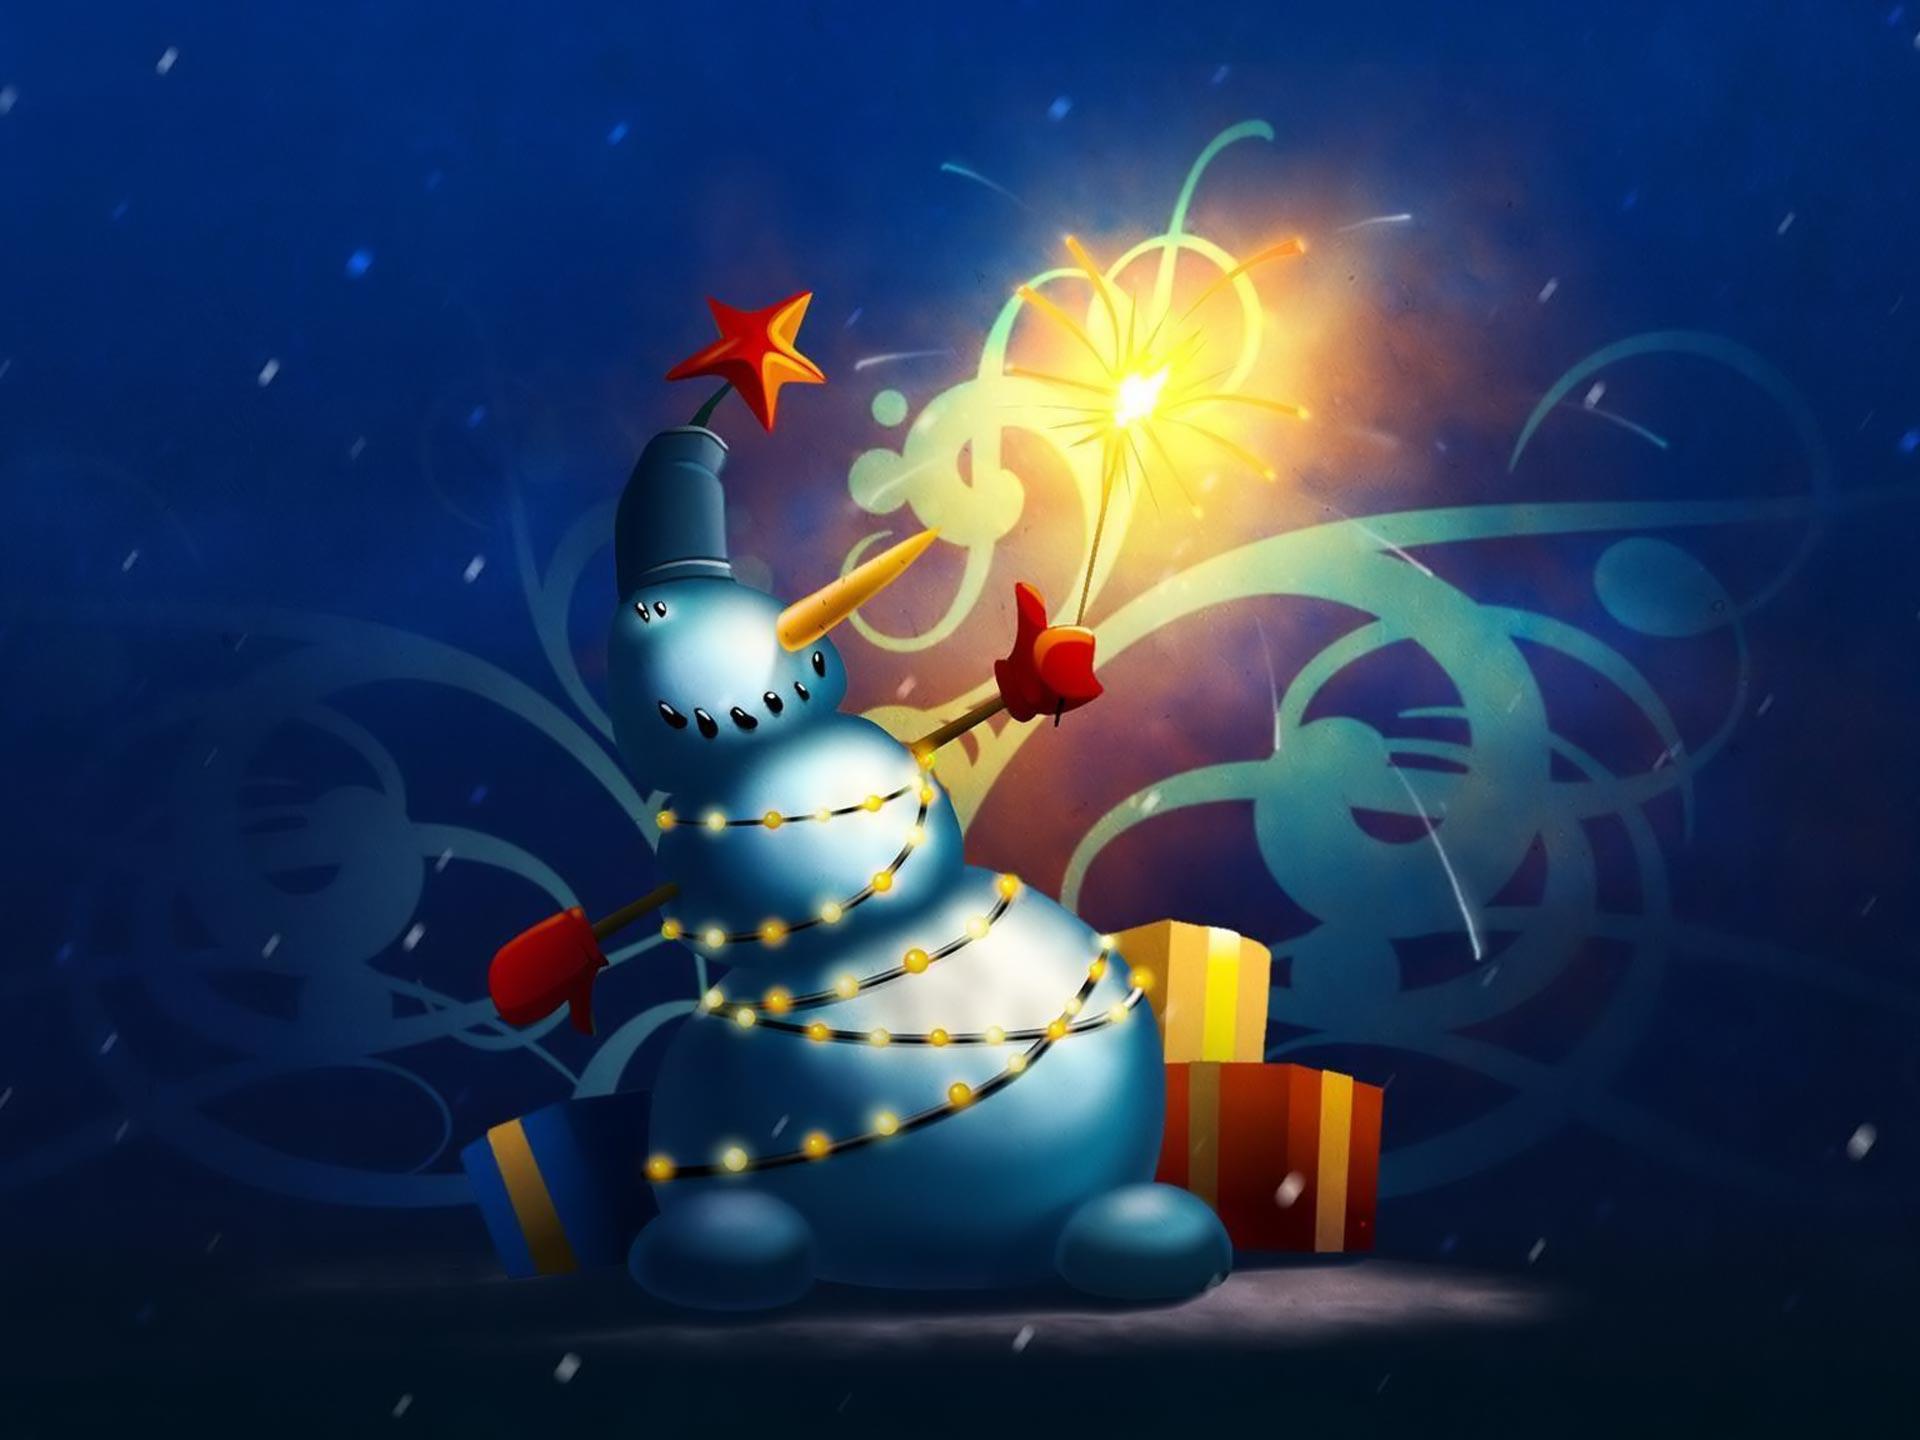 Desktop Wallpaper · Gallery · Miscellaneous · Christmas snowman